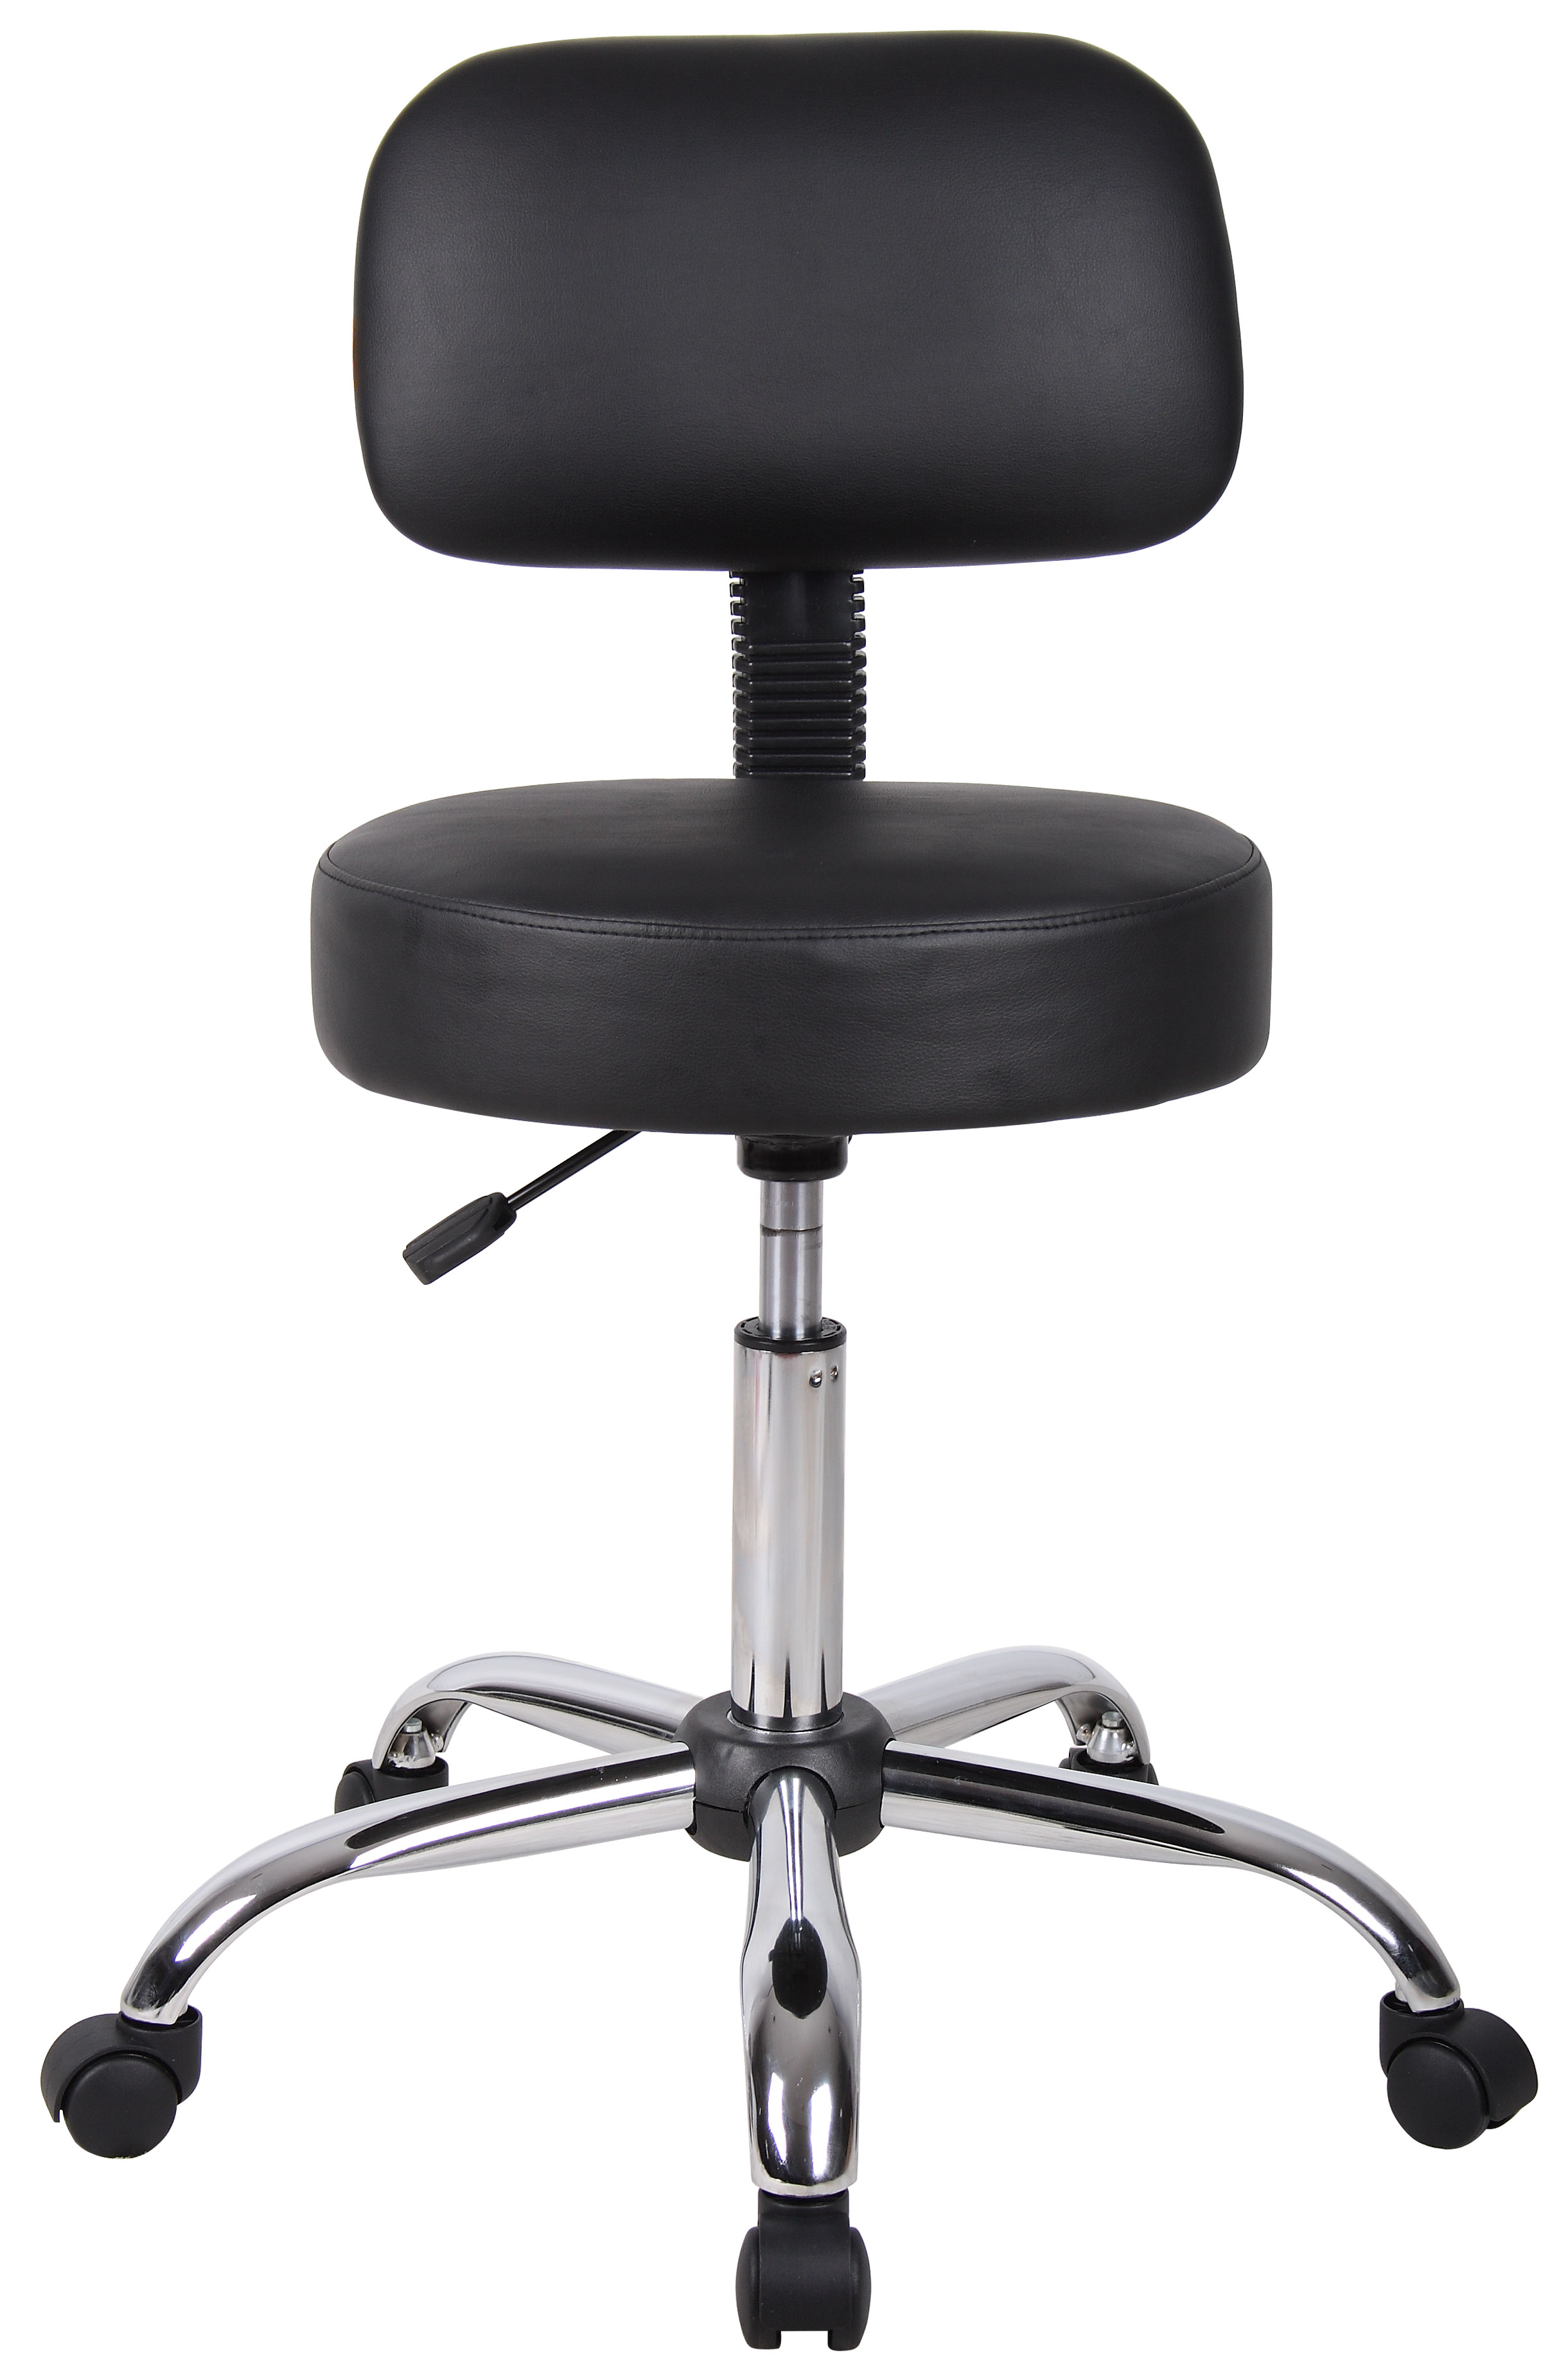 Boss Office & Home B245-BK Adjustable Medical Spa Rolling Desk Stool with Back, Black - image 3 of 7